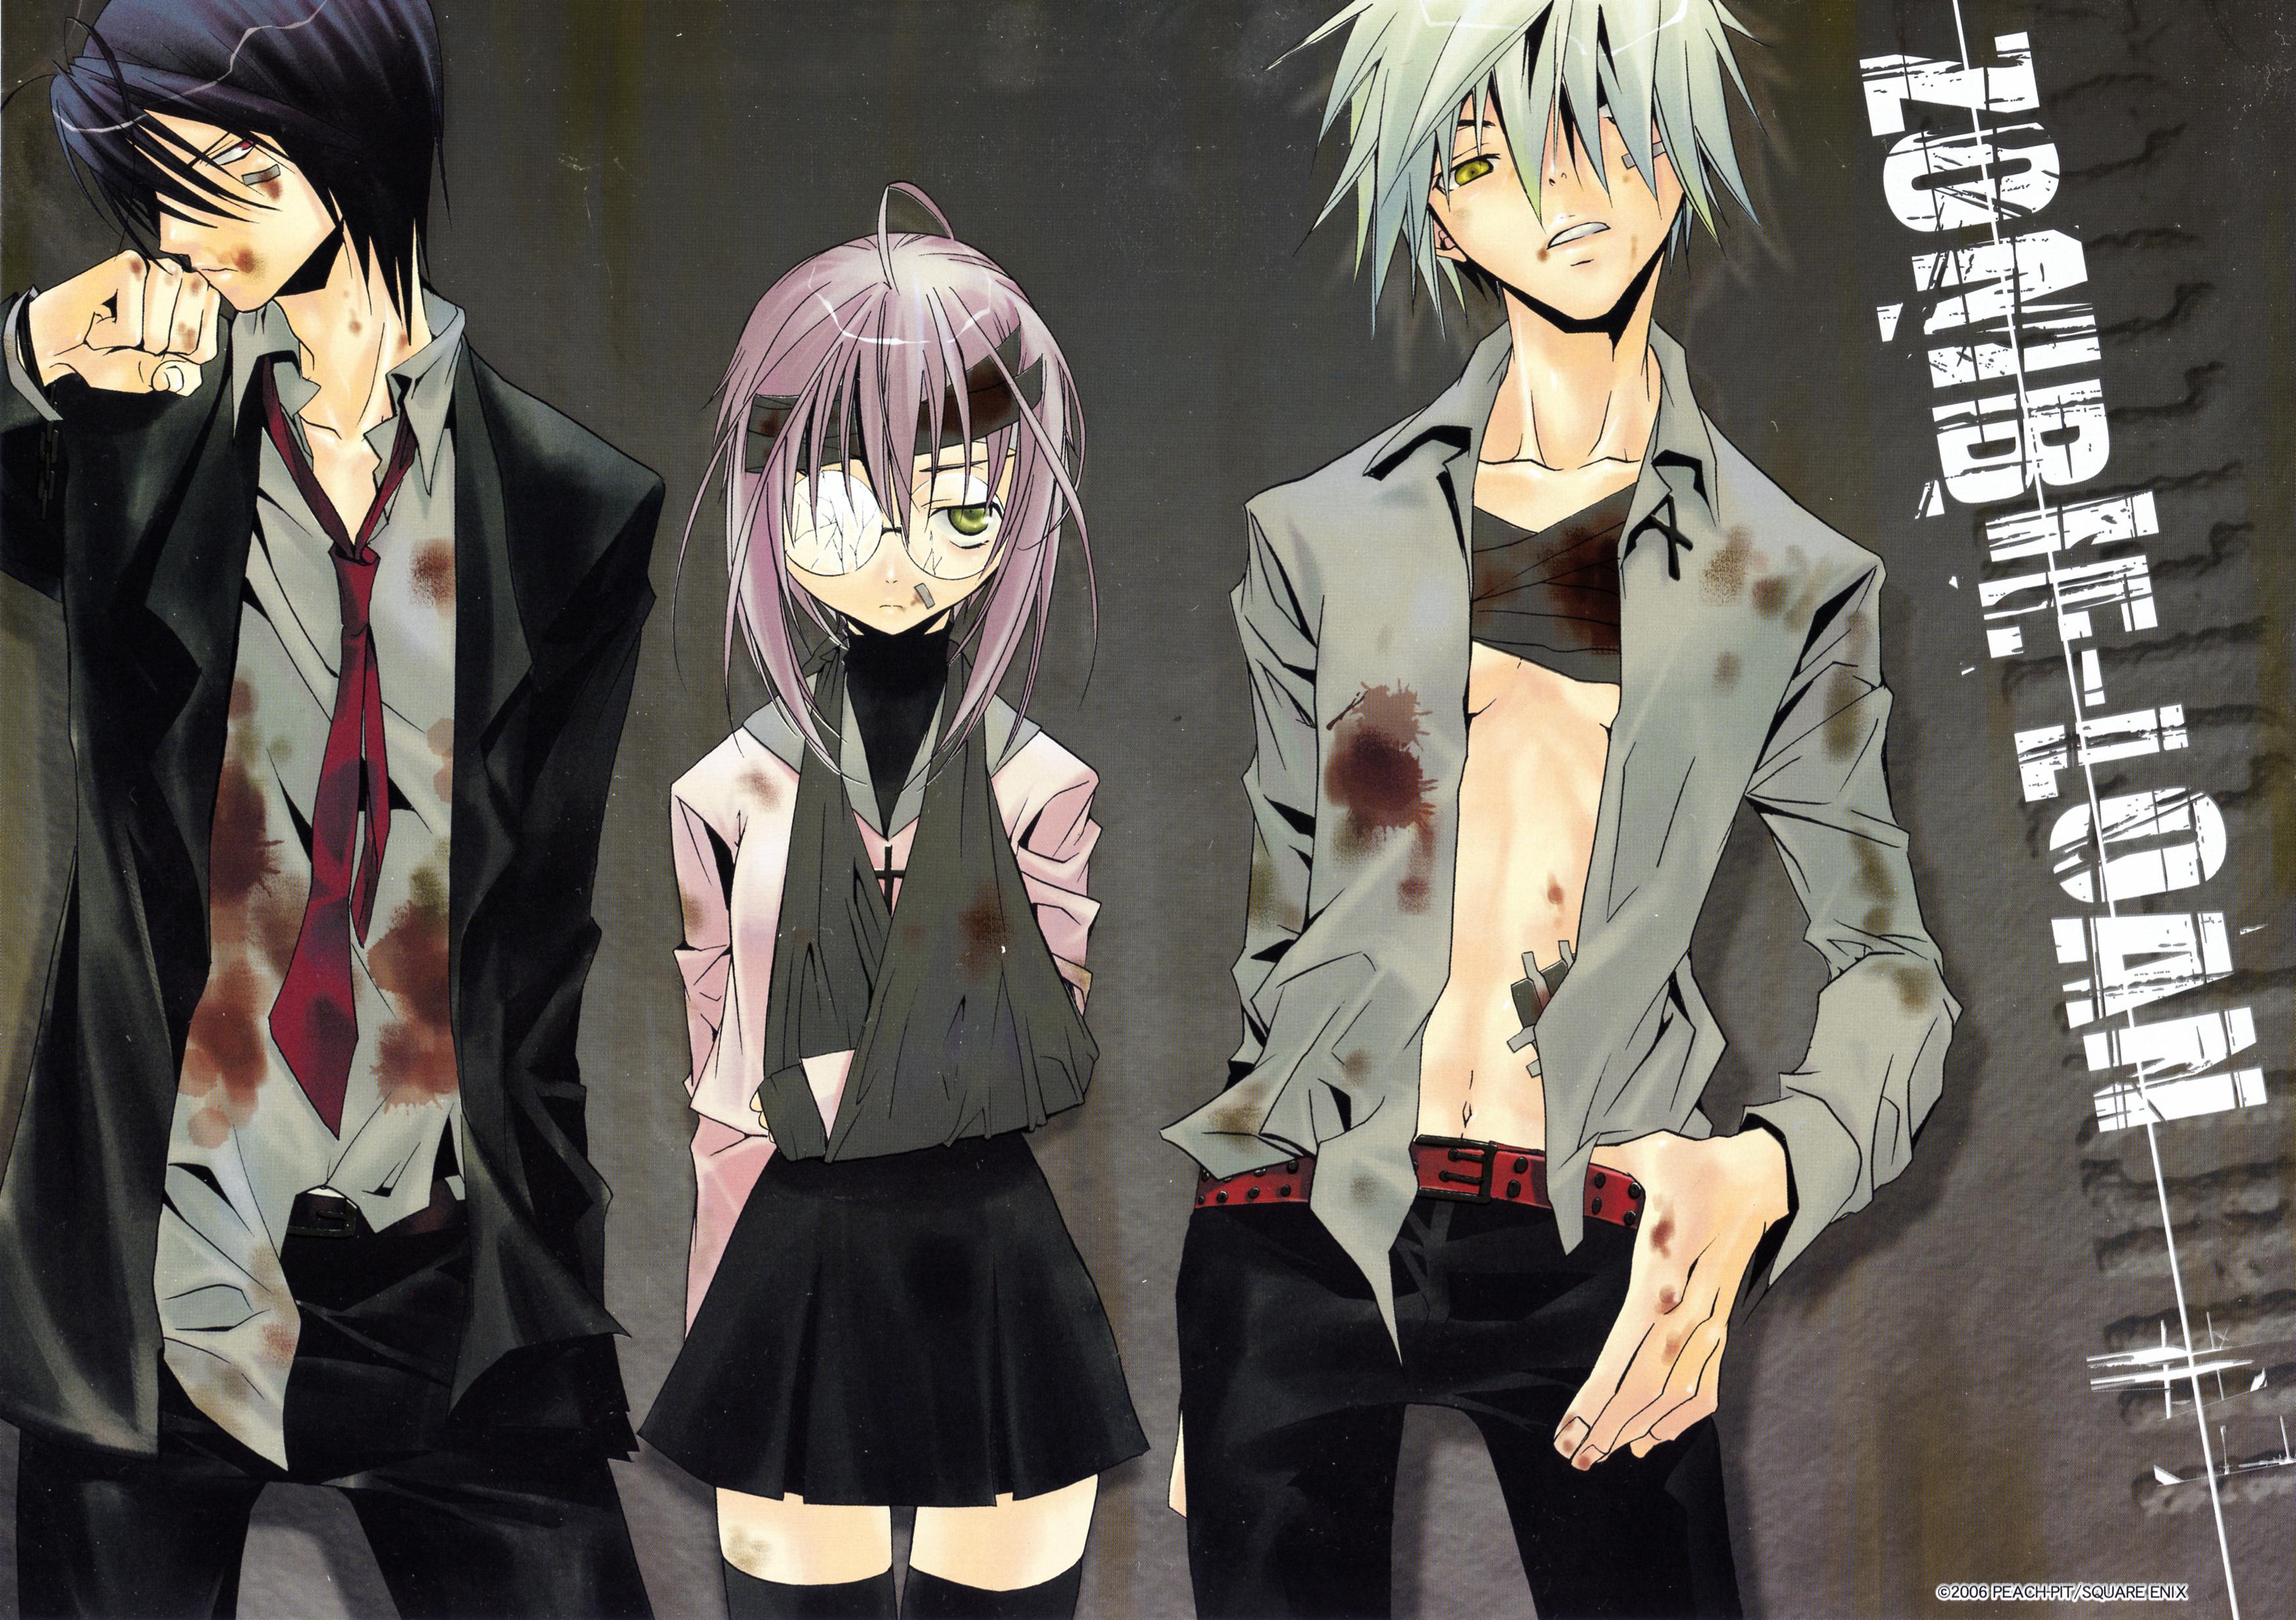 Anime Hajime Review: Kore wa Zombie Desu ka? Of the Dead - Anime Hajime-demhanvico.com.vn